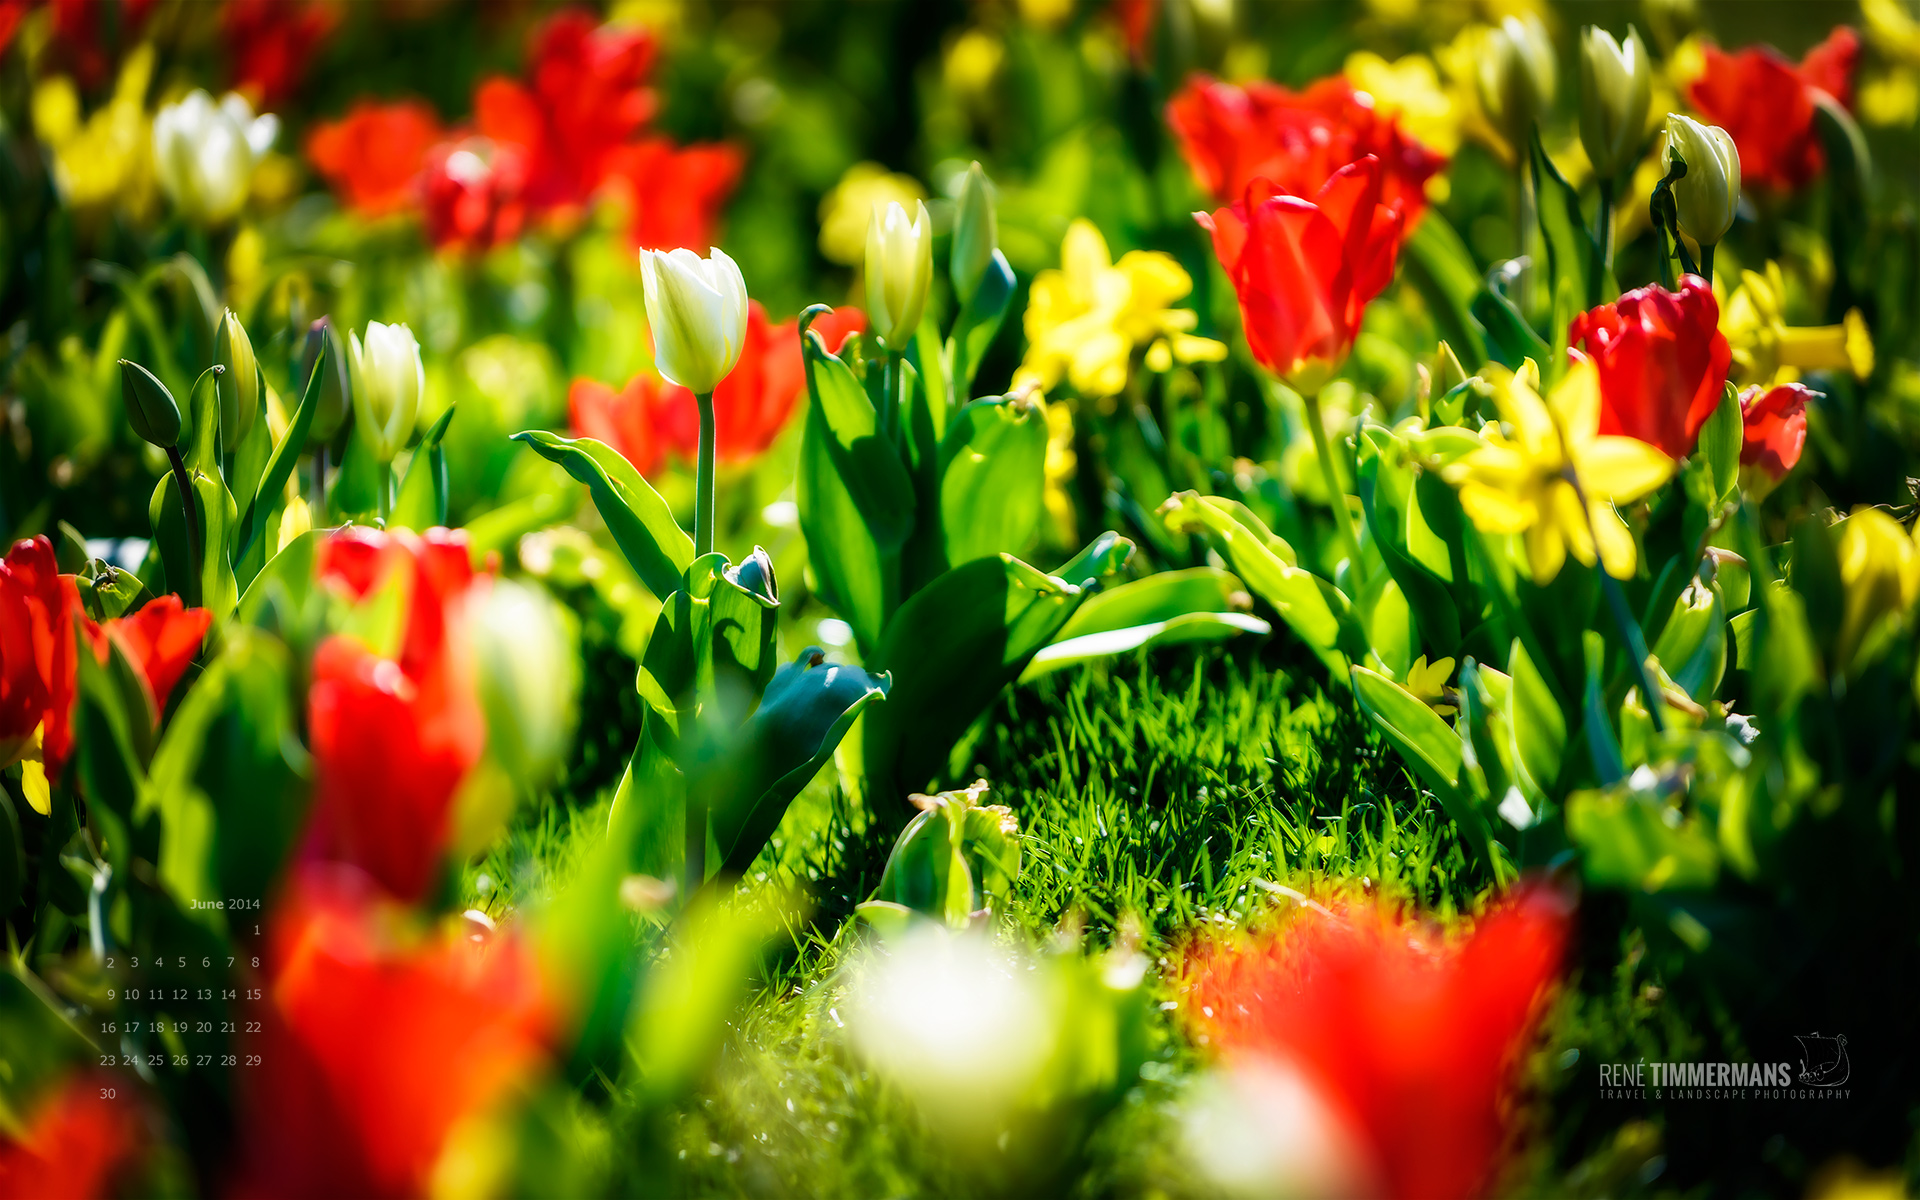 Wallpaper Brings Vibrant Natural Spring Colors To Your Desktop